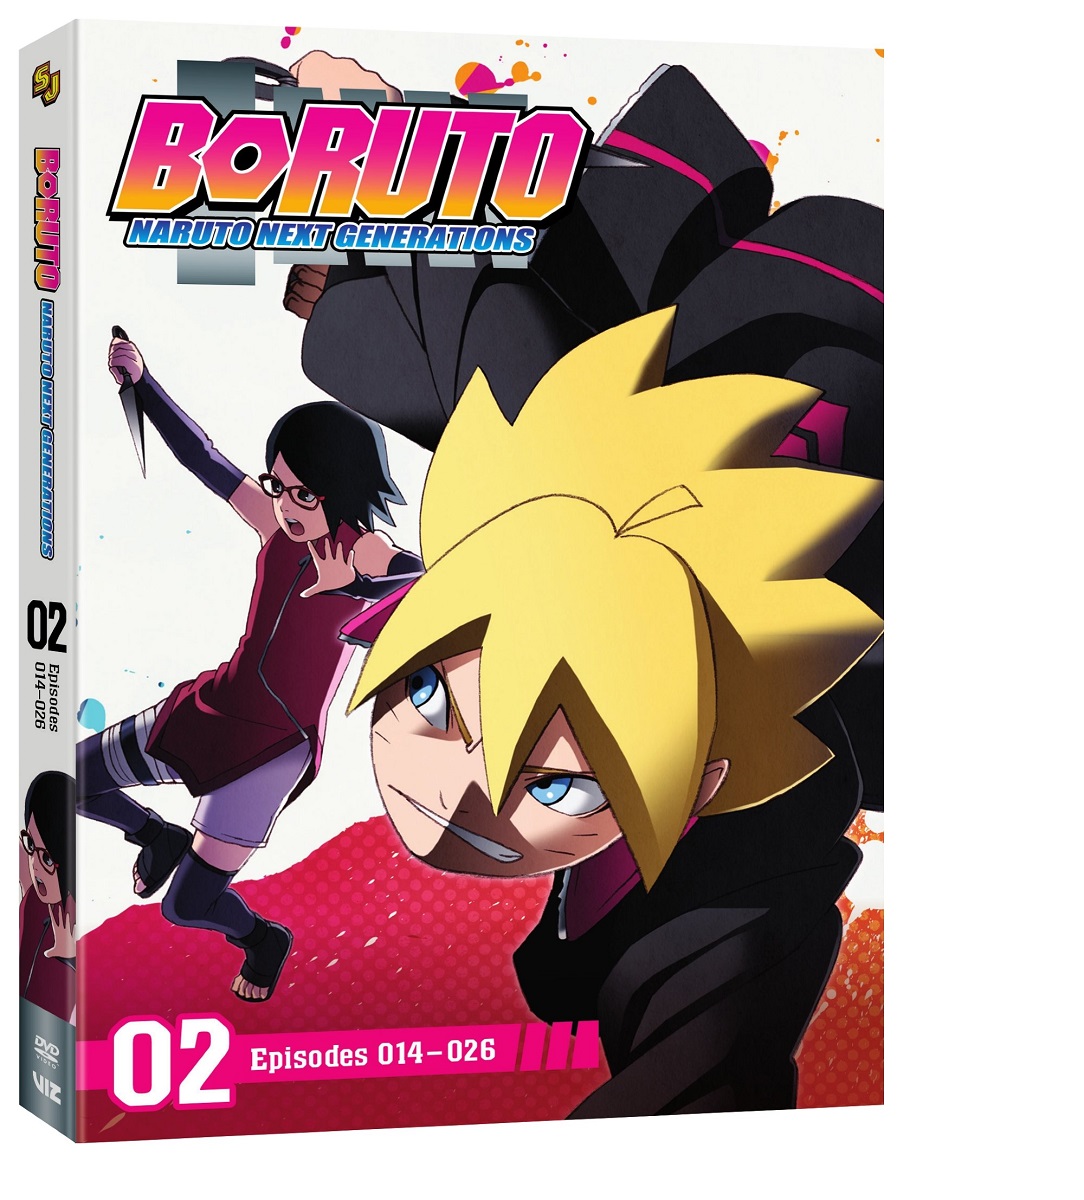 Boruto Naruto Next Generations Set 12 Blu-ray